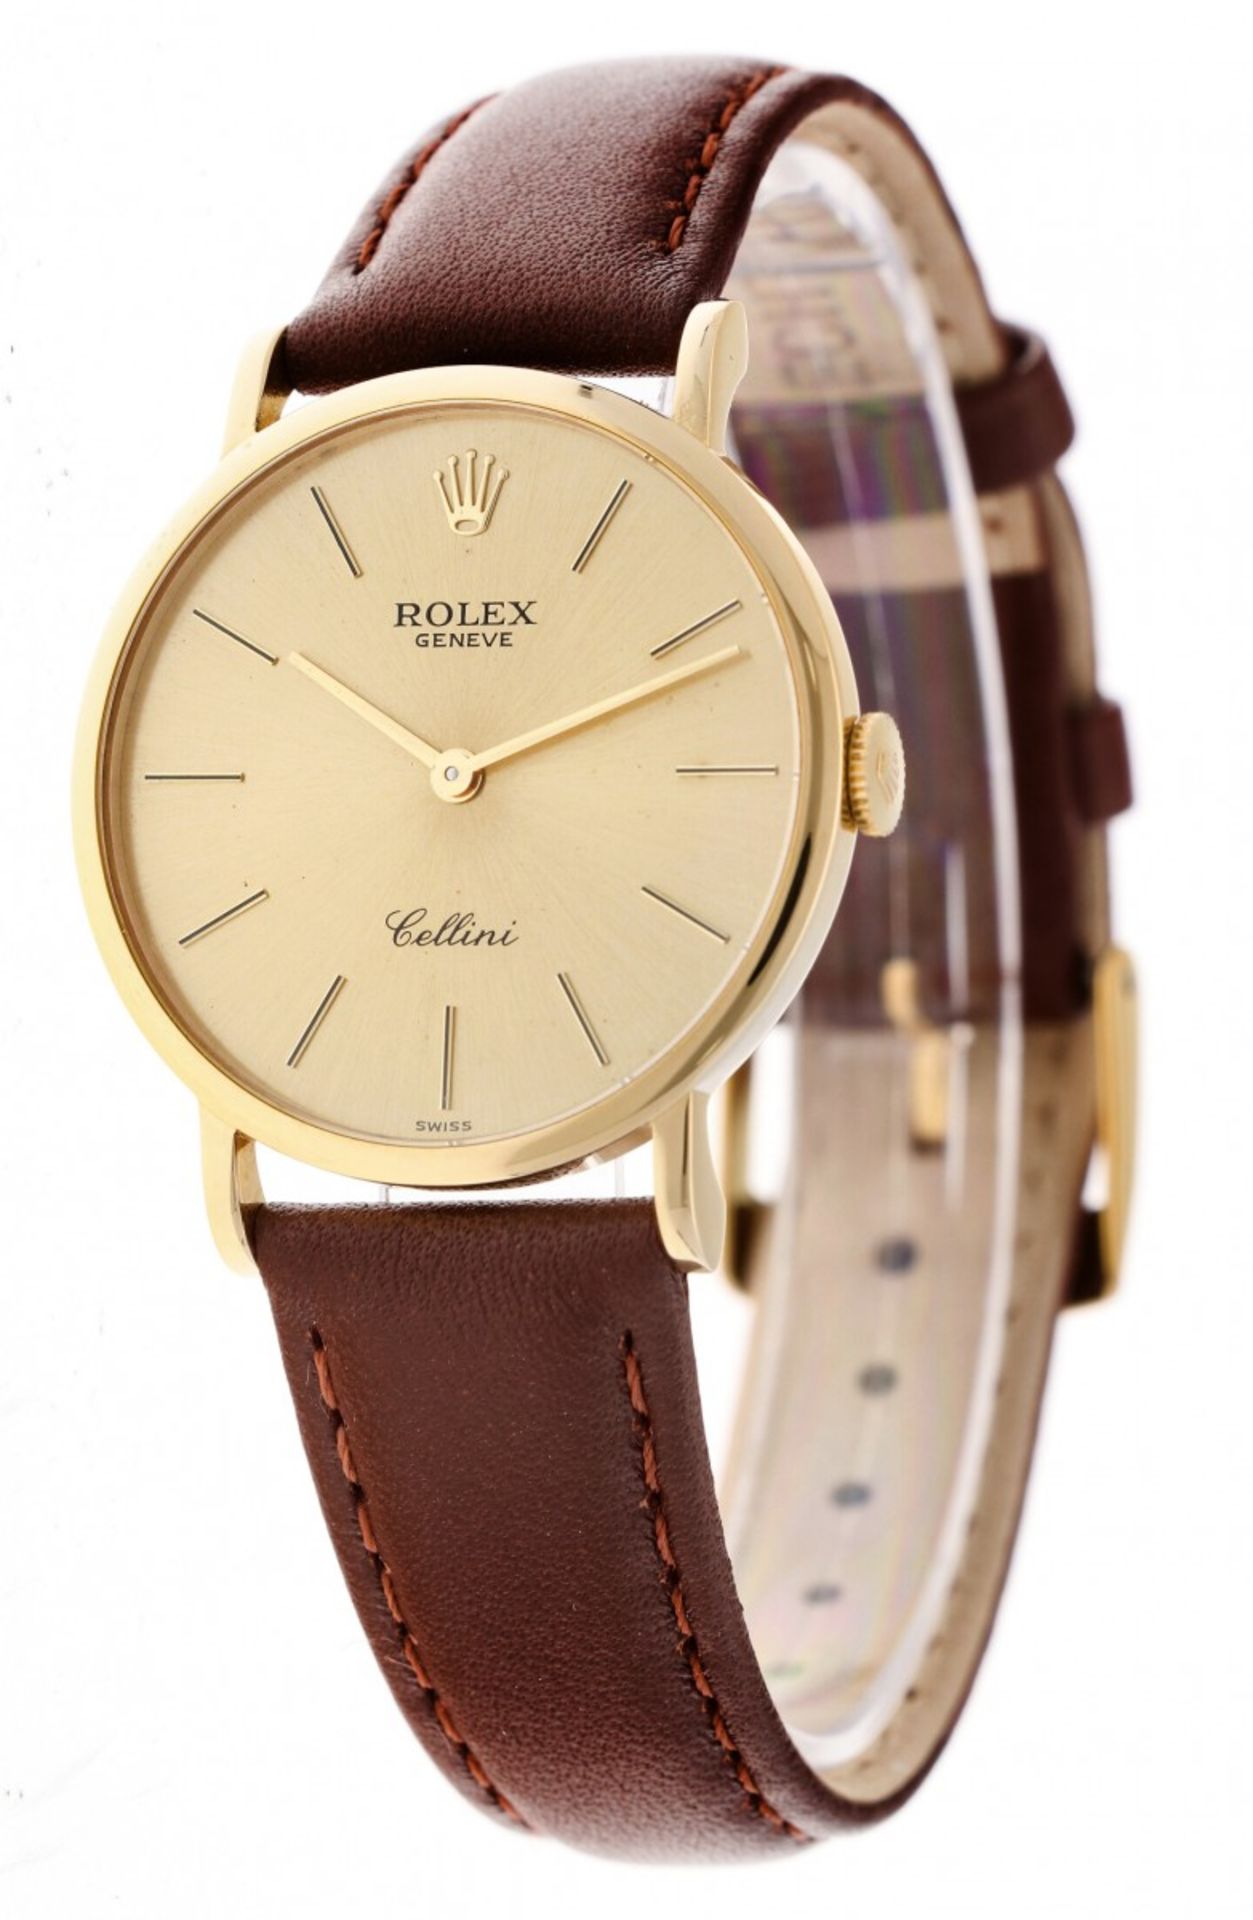 Rolex Cellini 5112 - Men's watch - ca. 1991 - Image 2 of 6